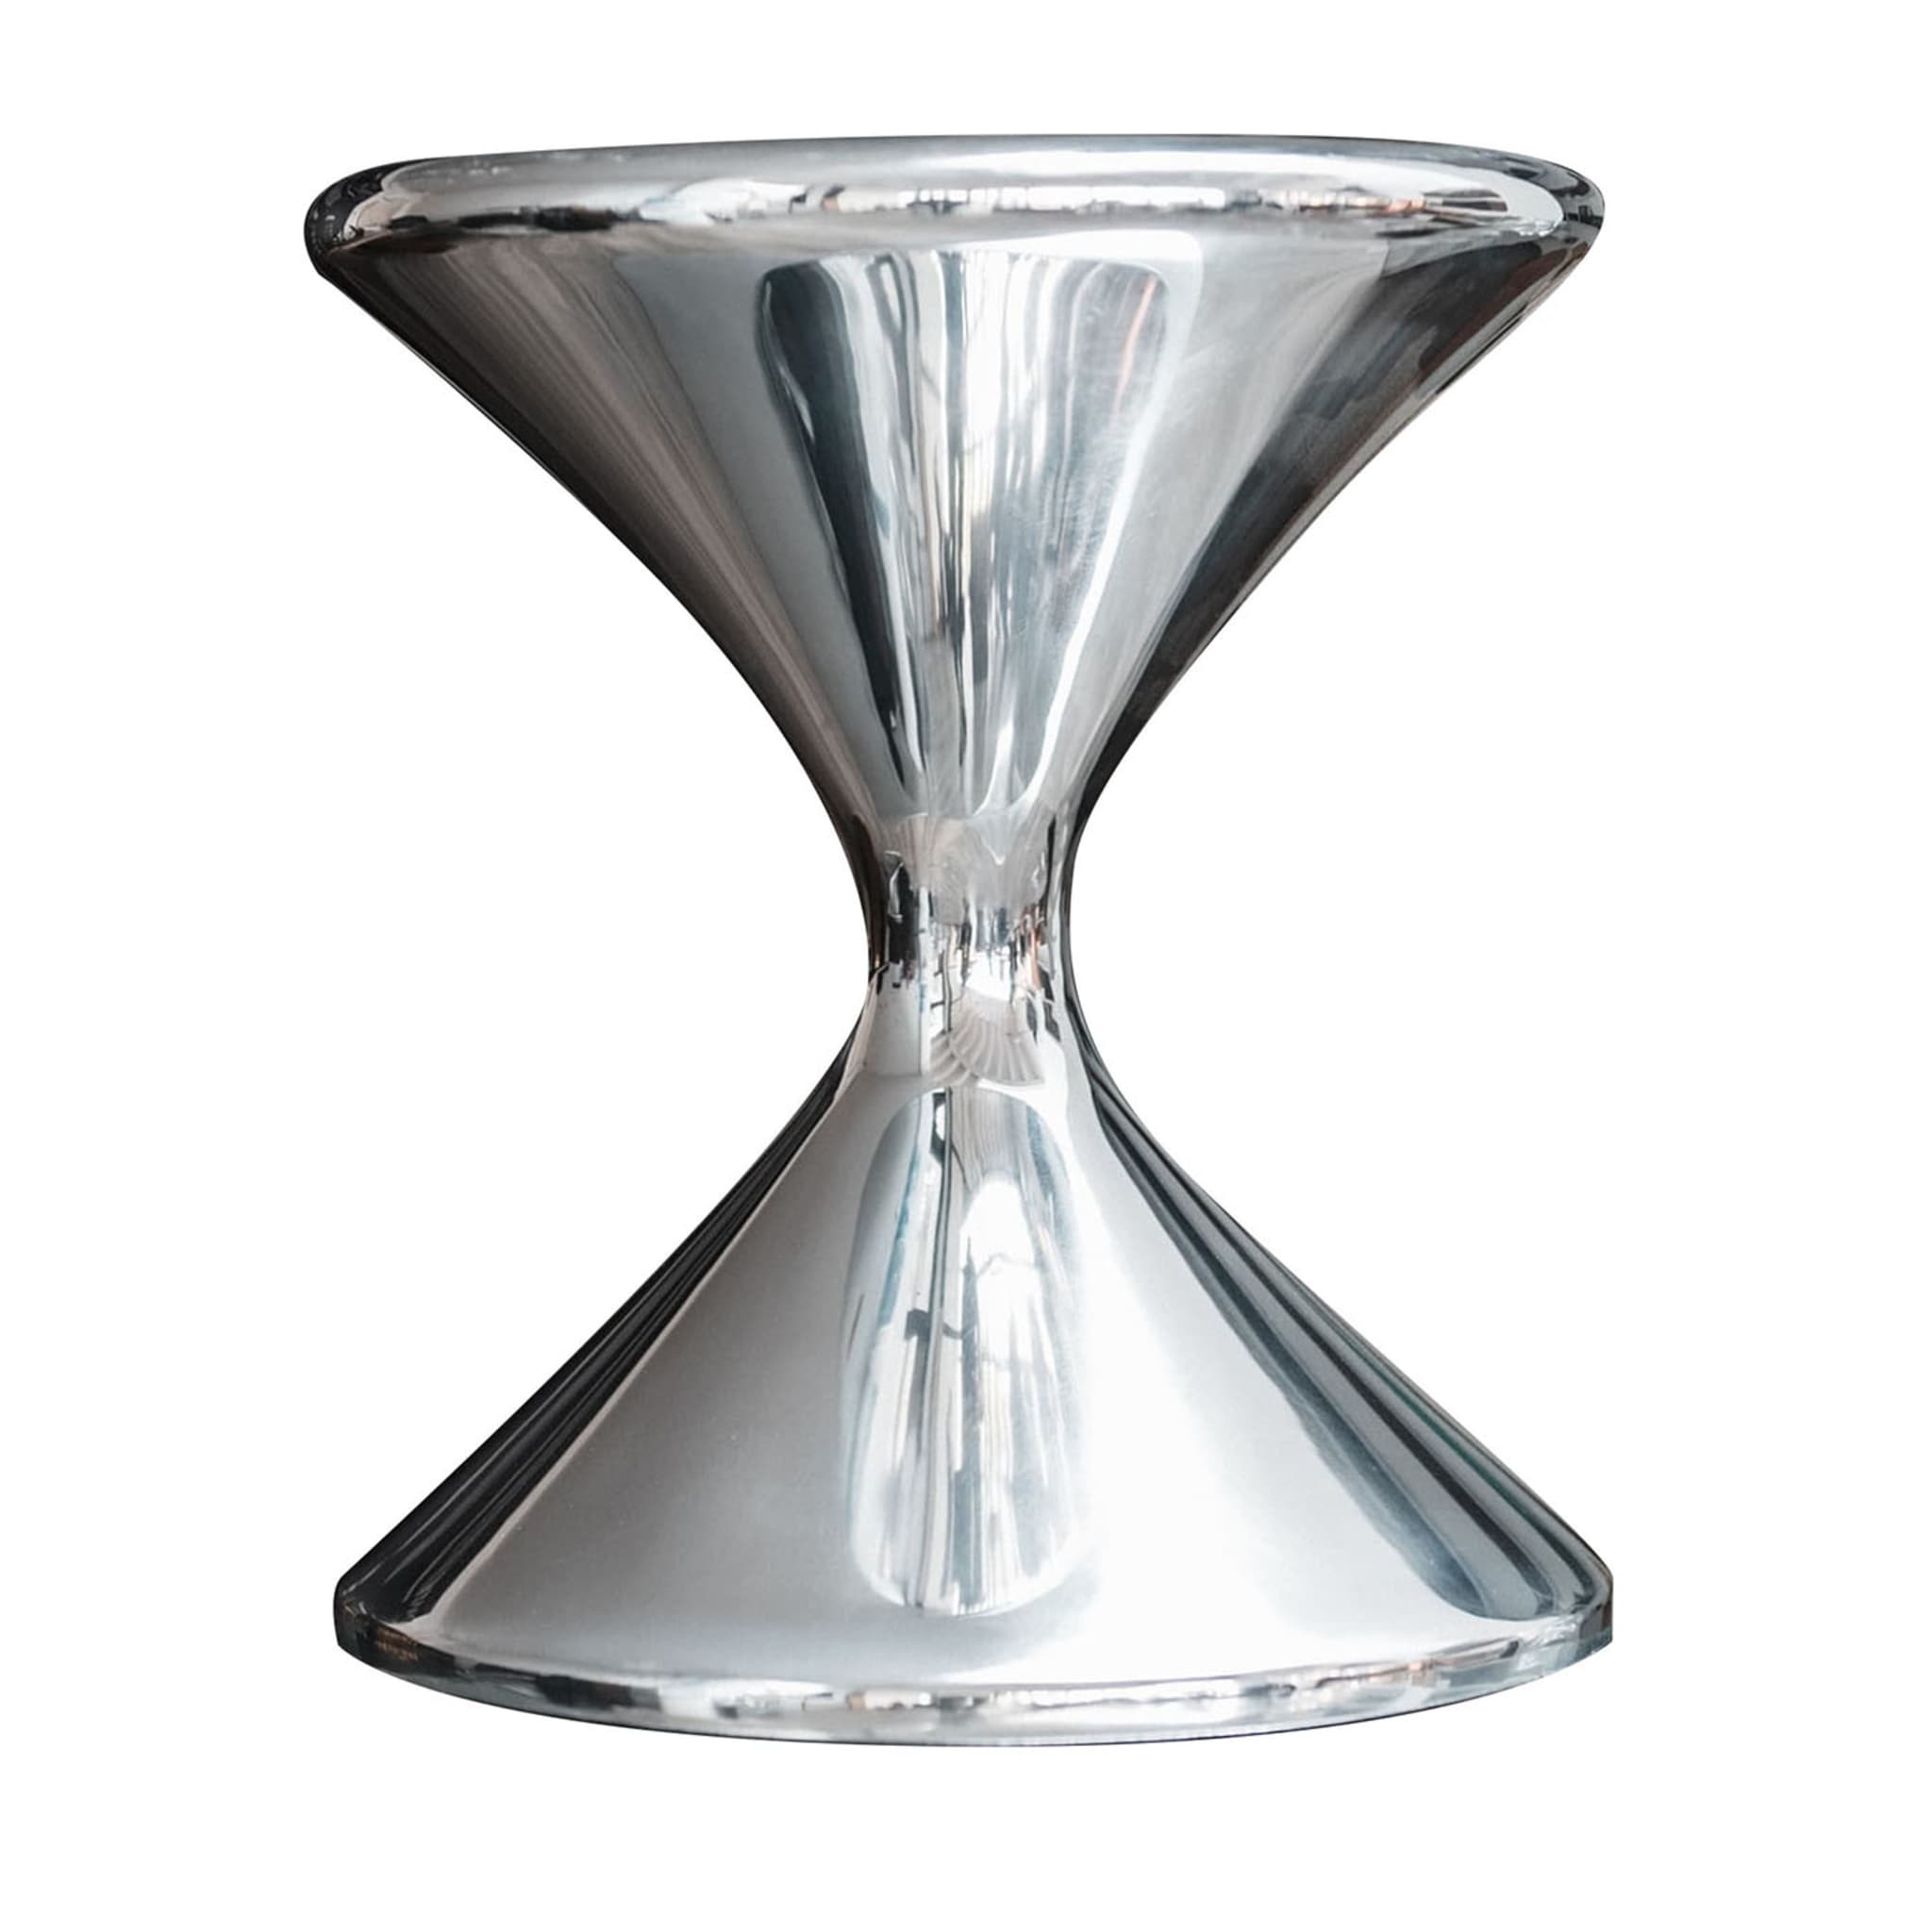 FoRMA Parabola Silvery Vase by Simone Micheli - Main view